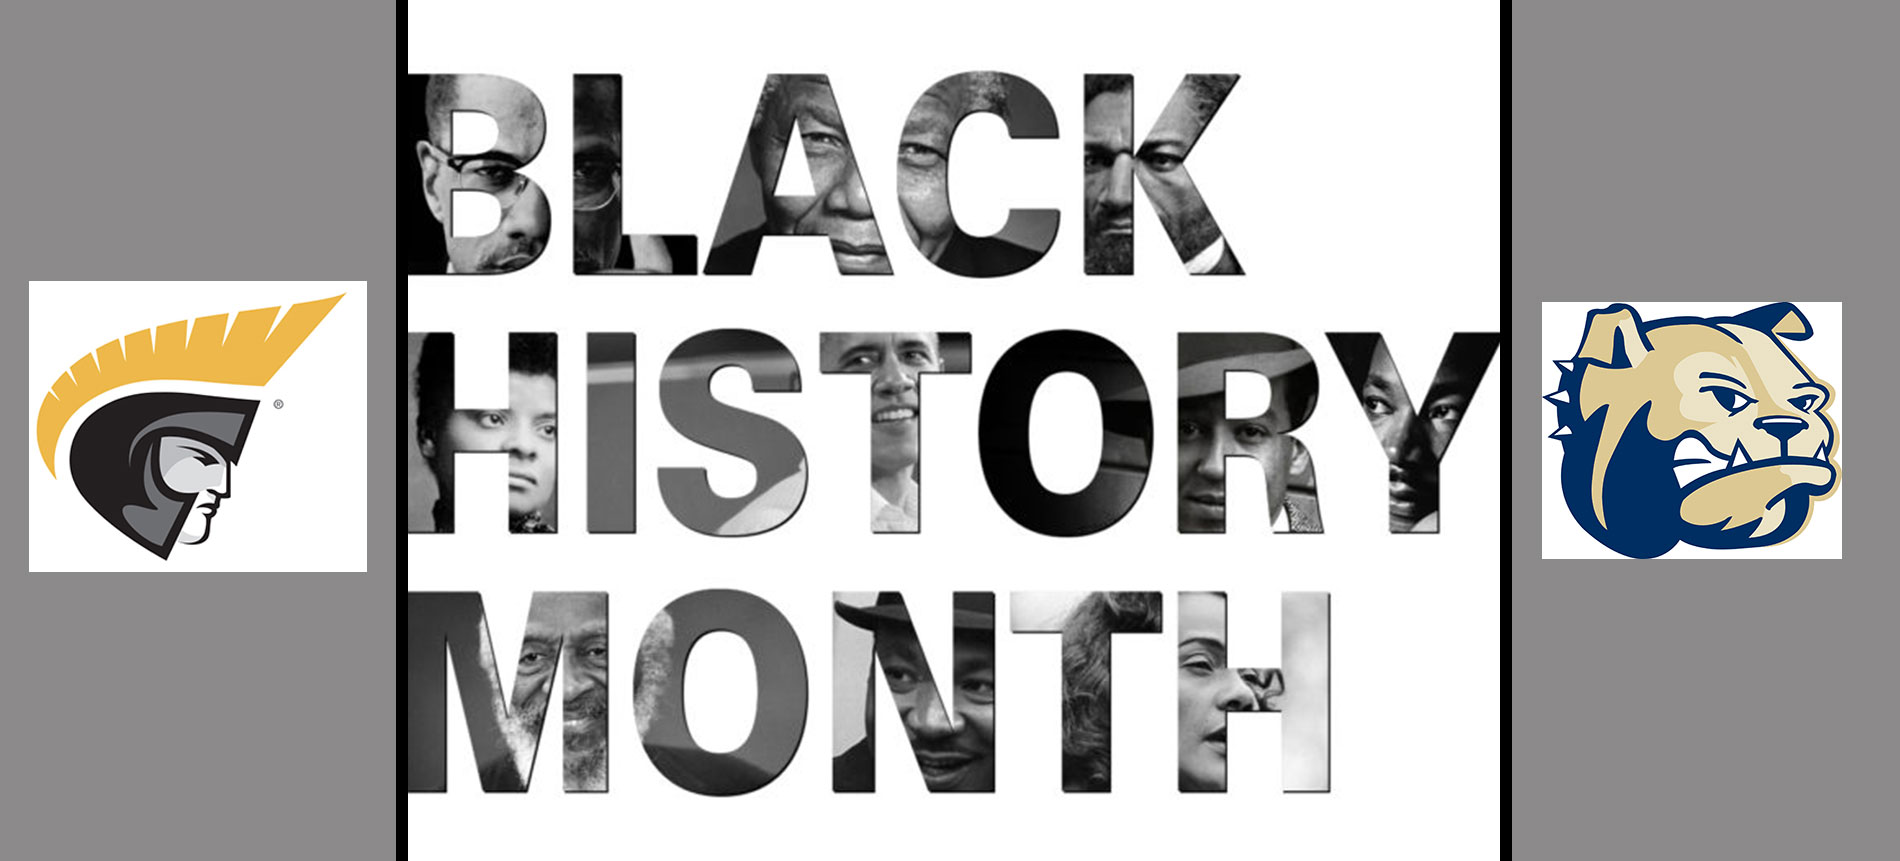 Trojans to Kickoff Black History Month on Saturday